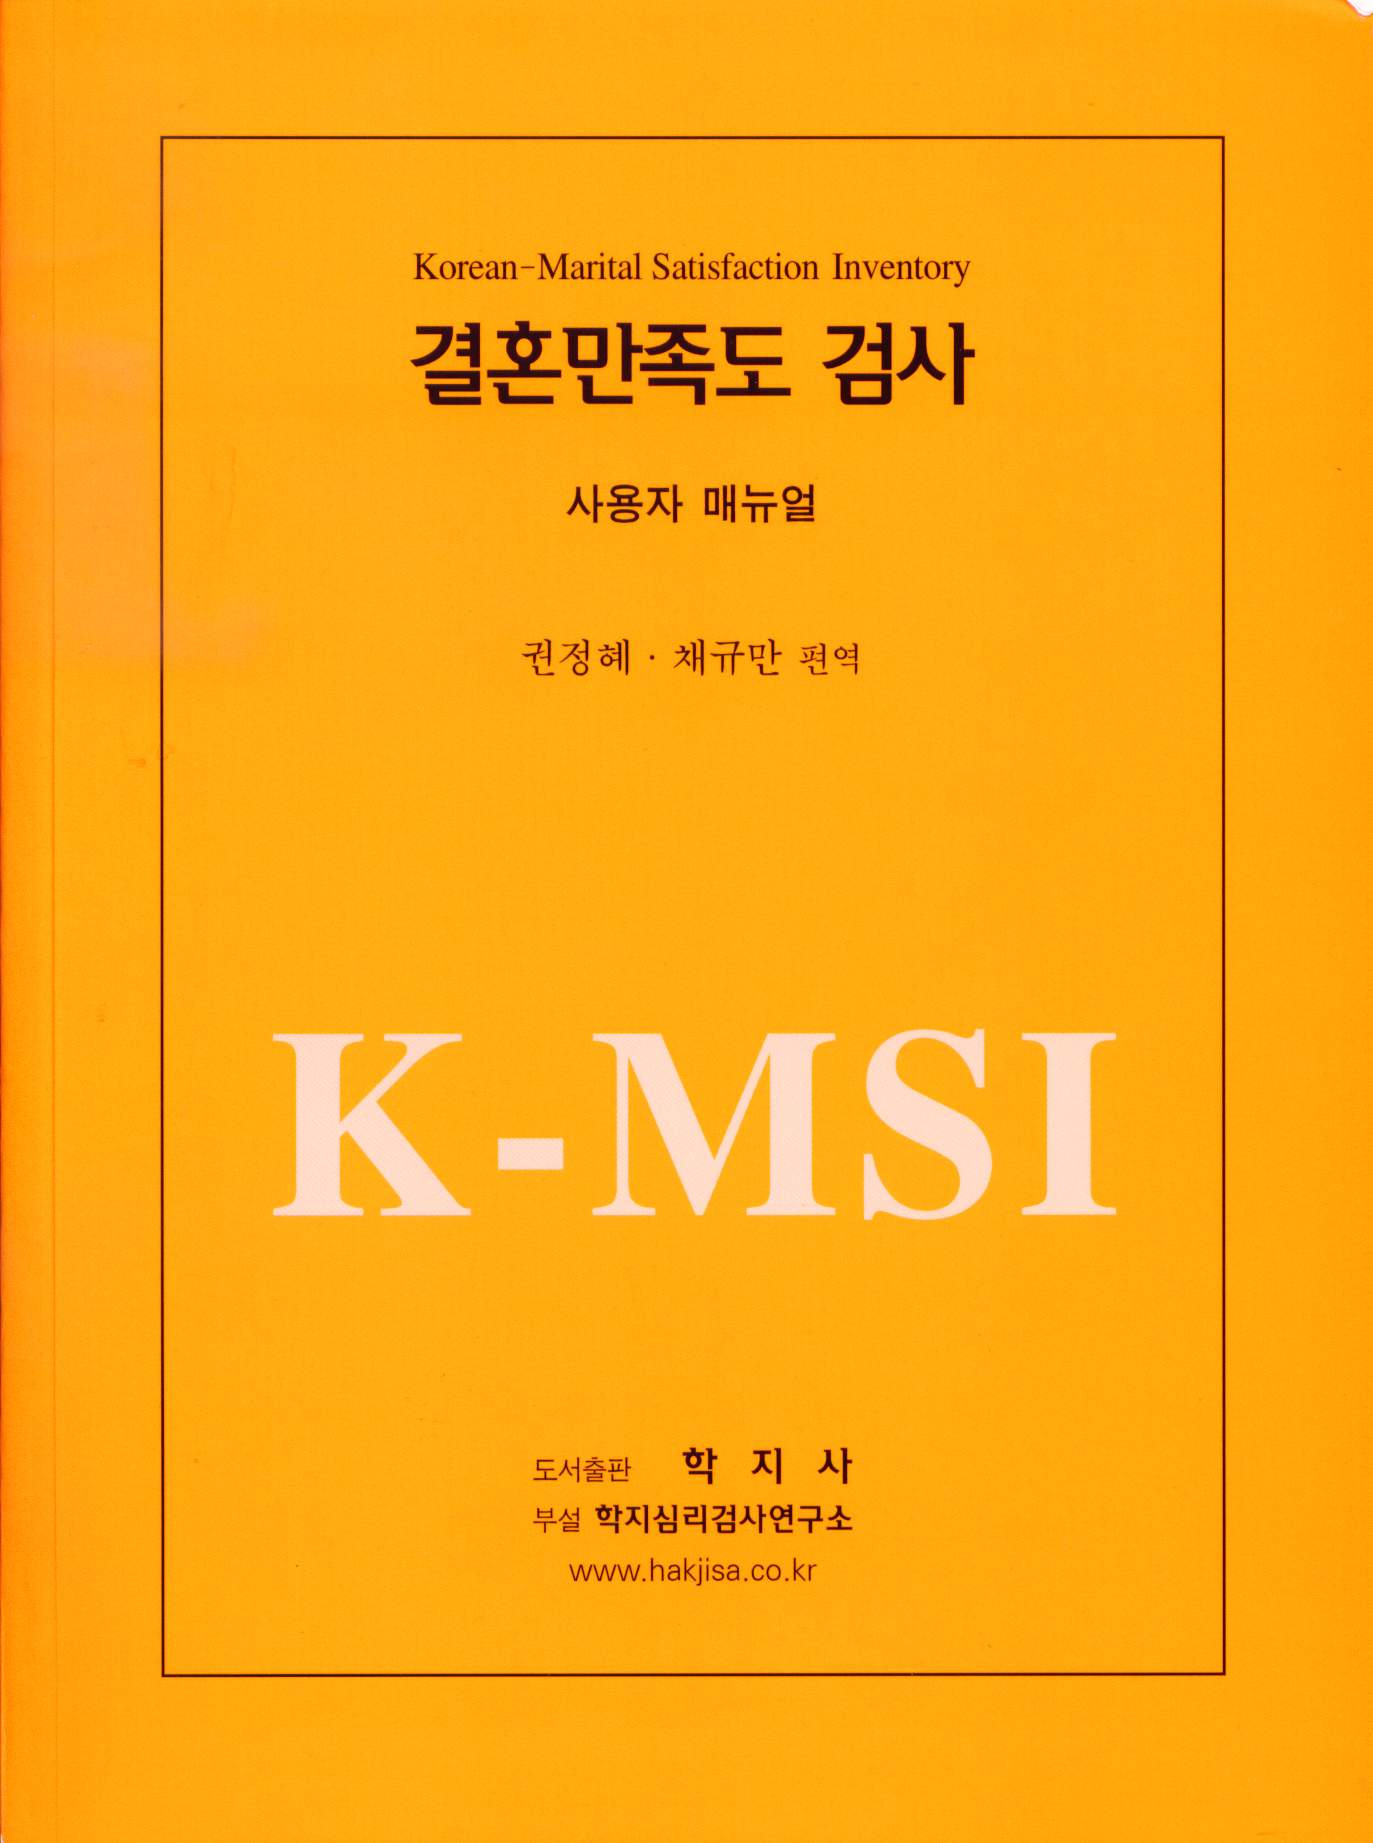 MSI-R Korean.jpg